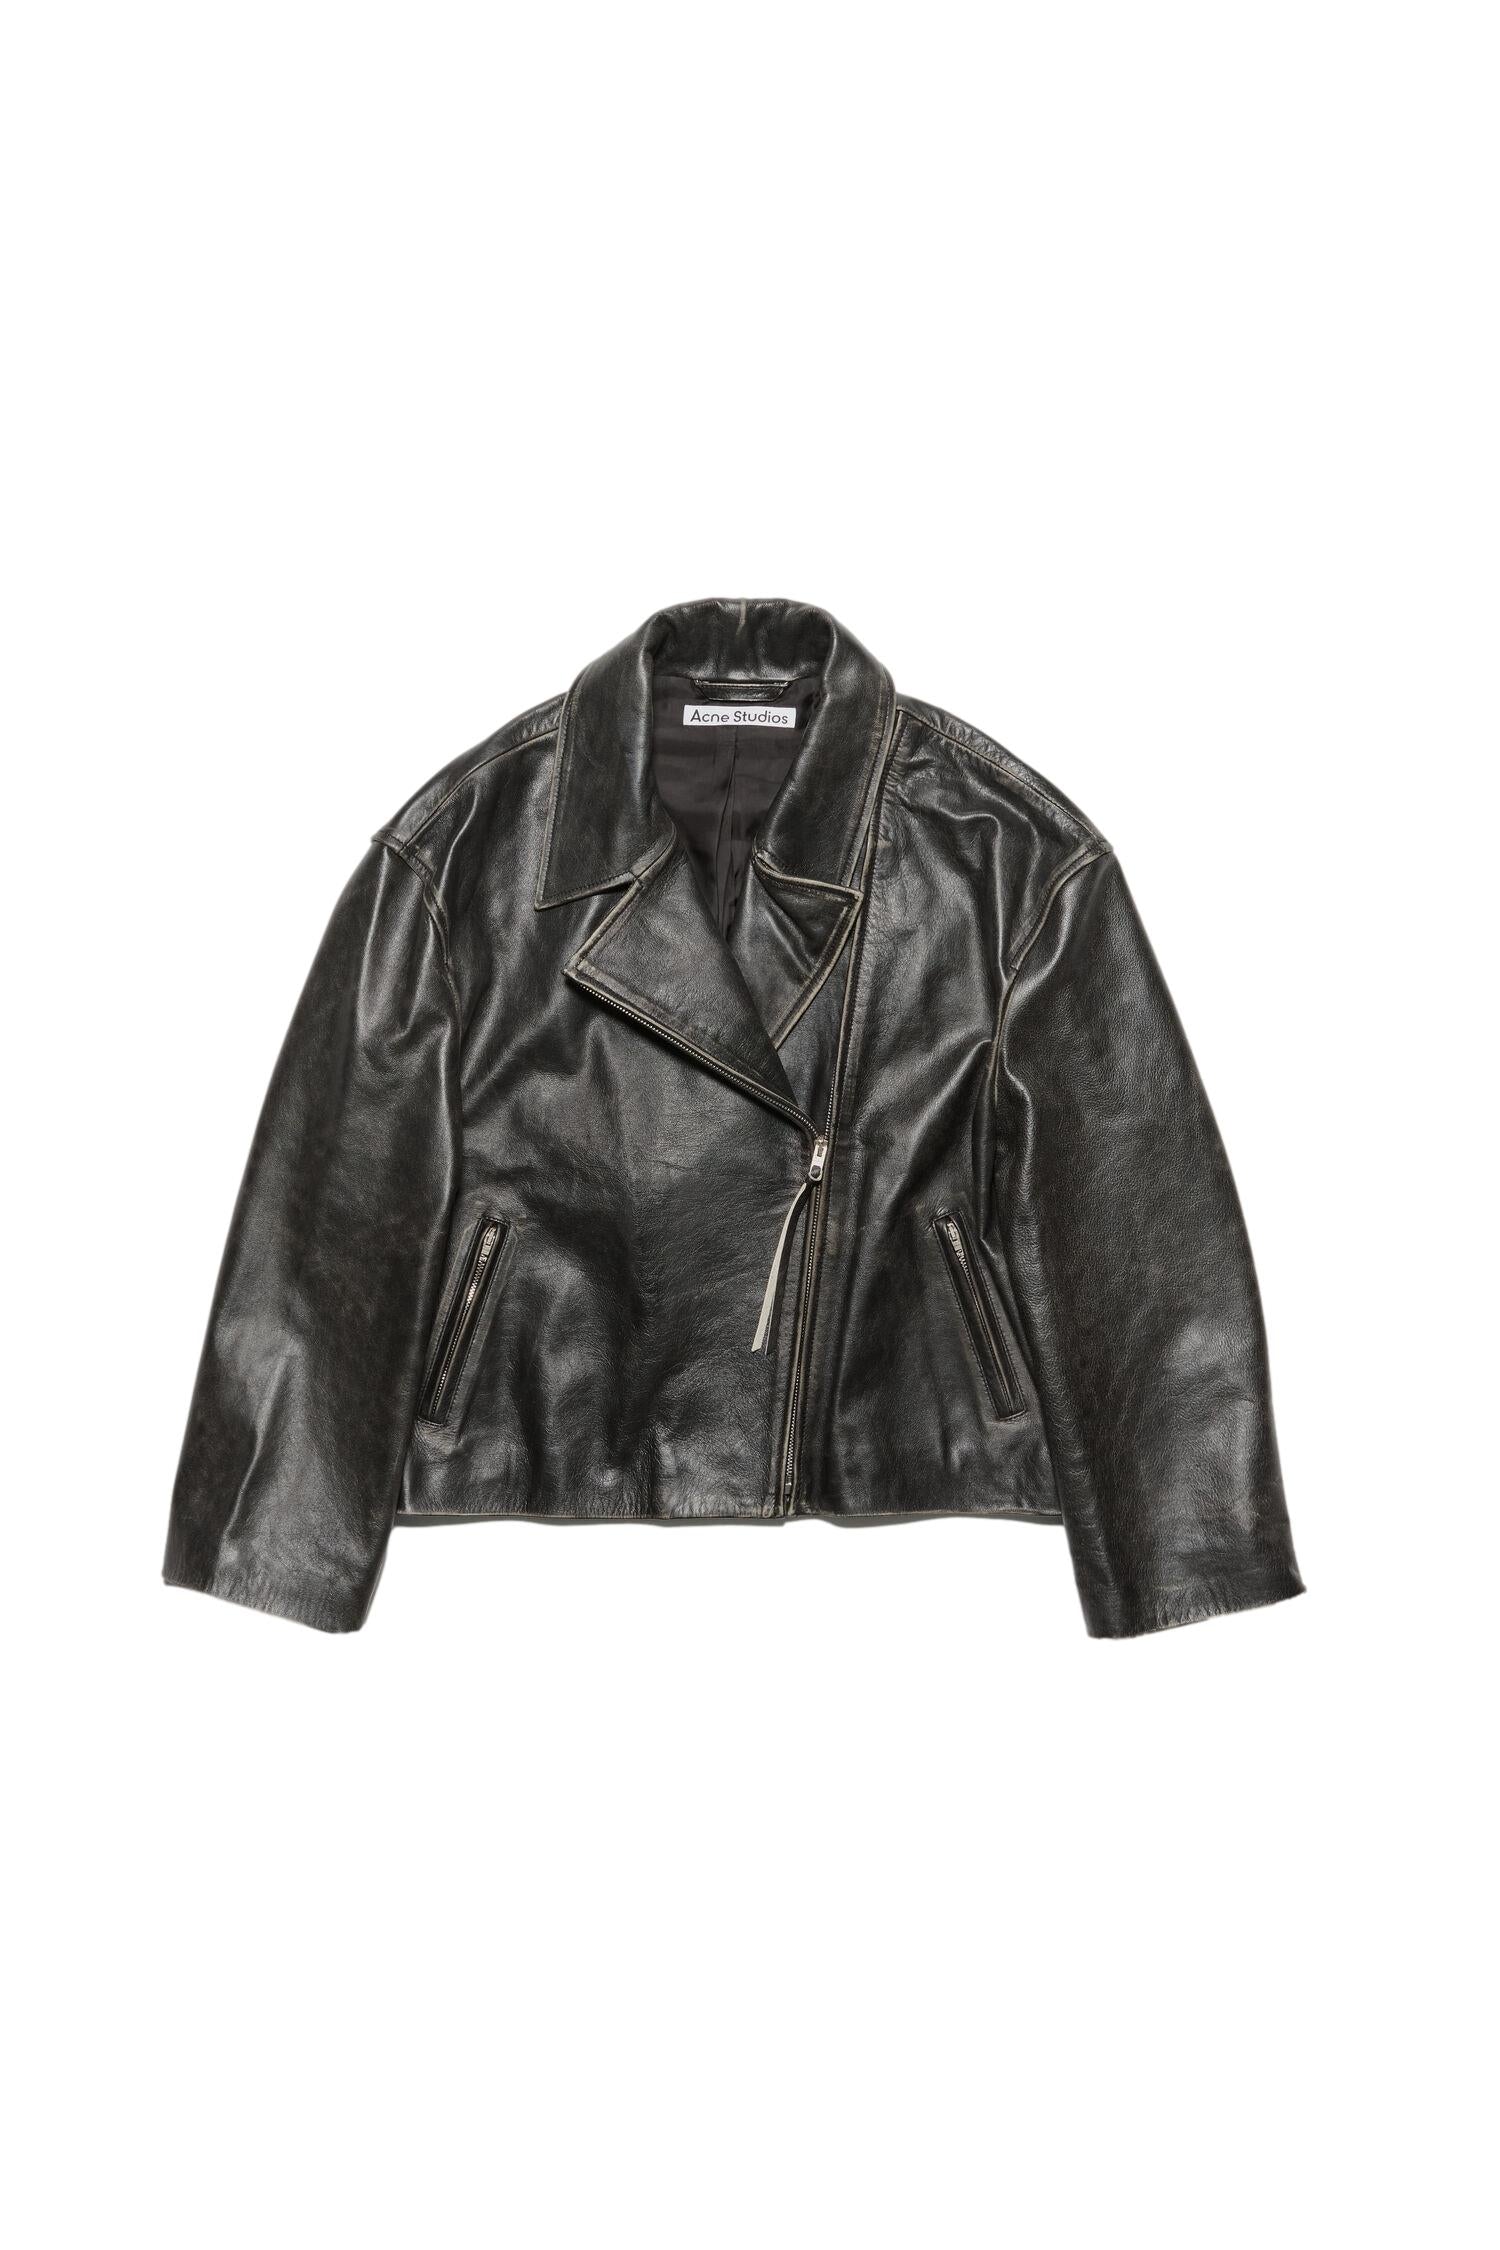 Acne Leather Jacket Jakke Vasket Sort - [modostore.no]